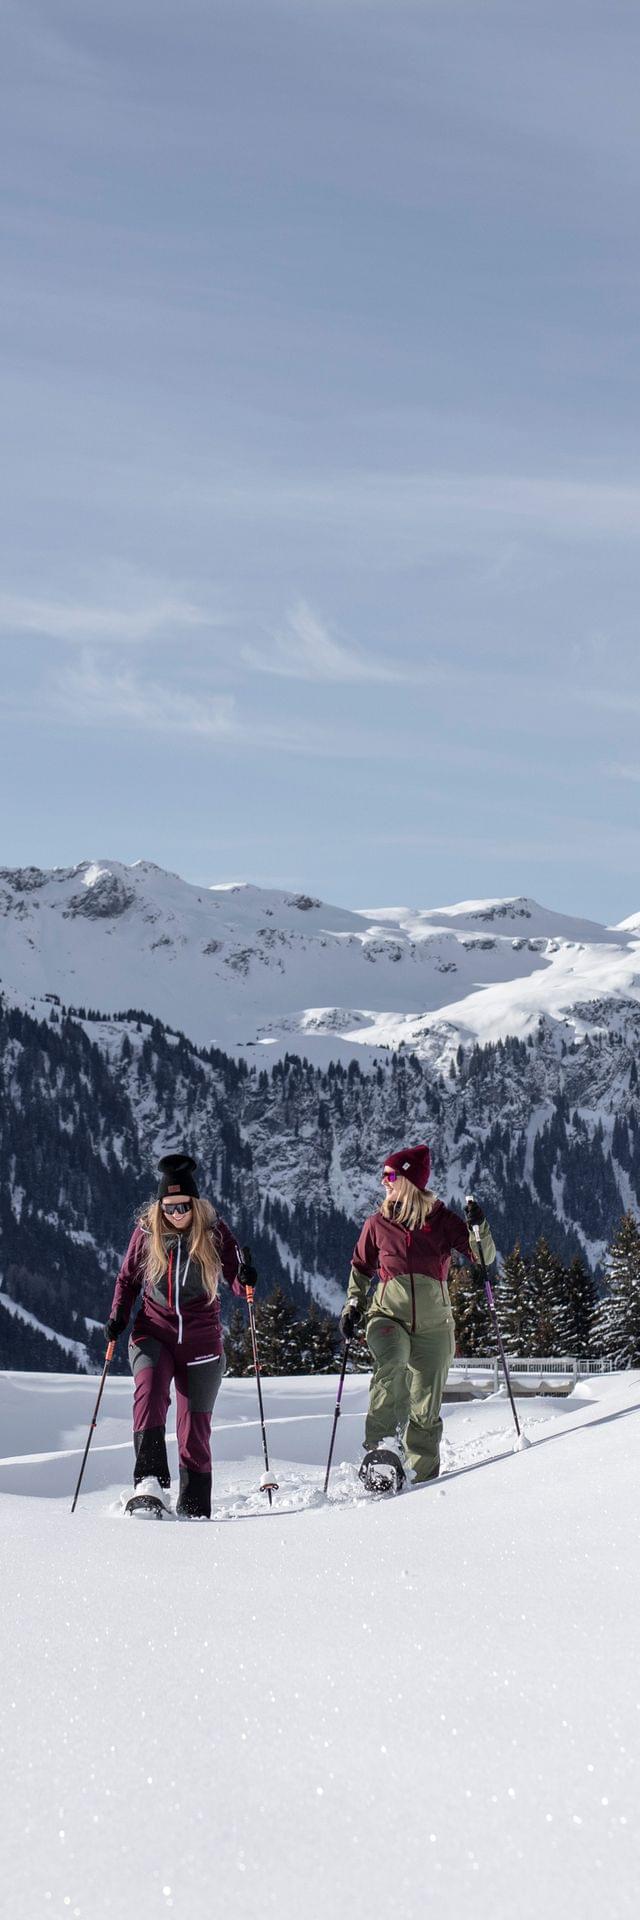 Schneeschuhwandern-Snow-Shoe-Hiking-8214x5476.jpg